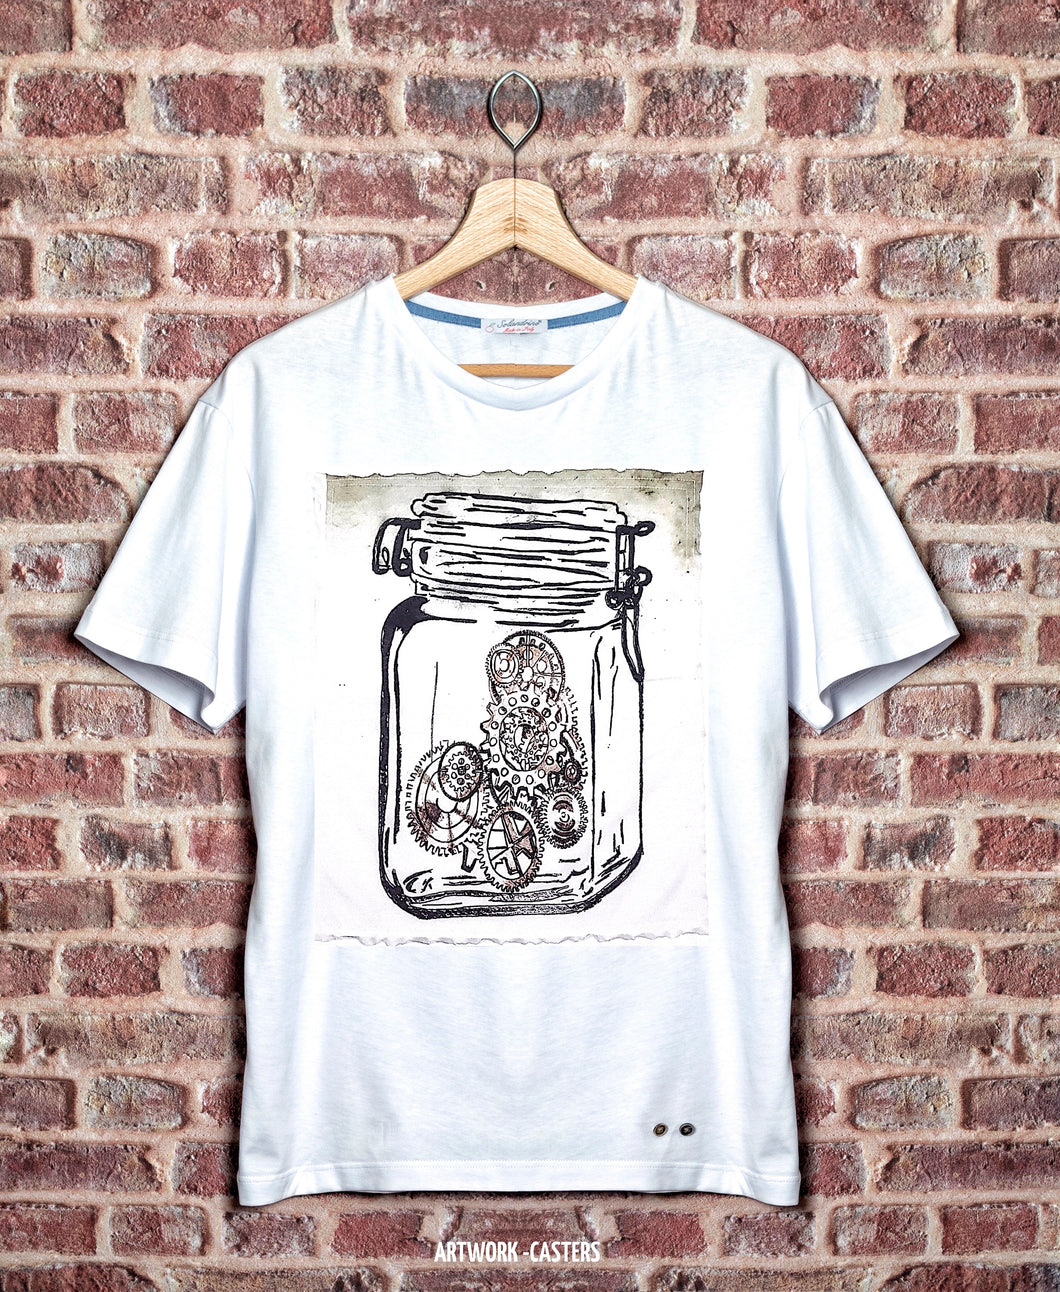 T-shirt made in Italy fantasia Casters 100% cotone jersey pettinato -DESIGN Casters-